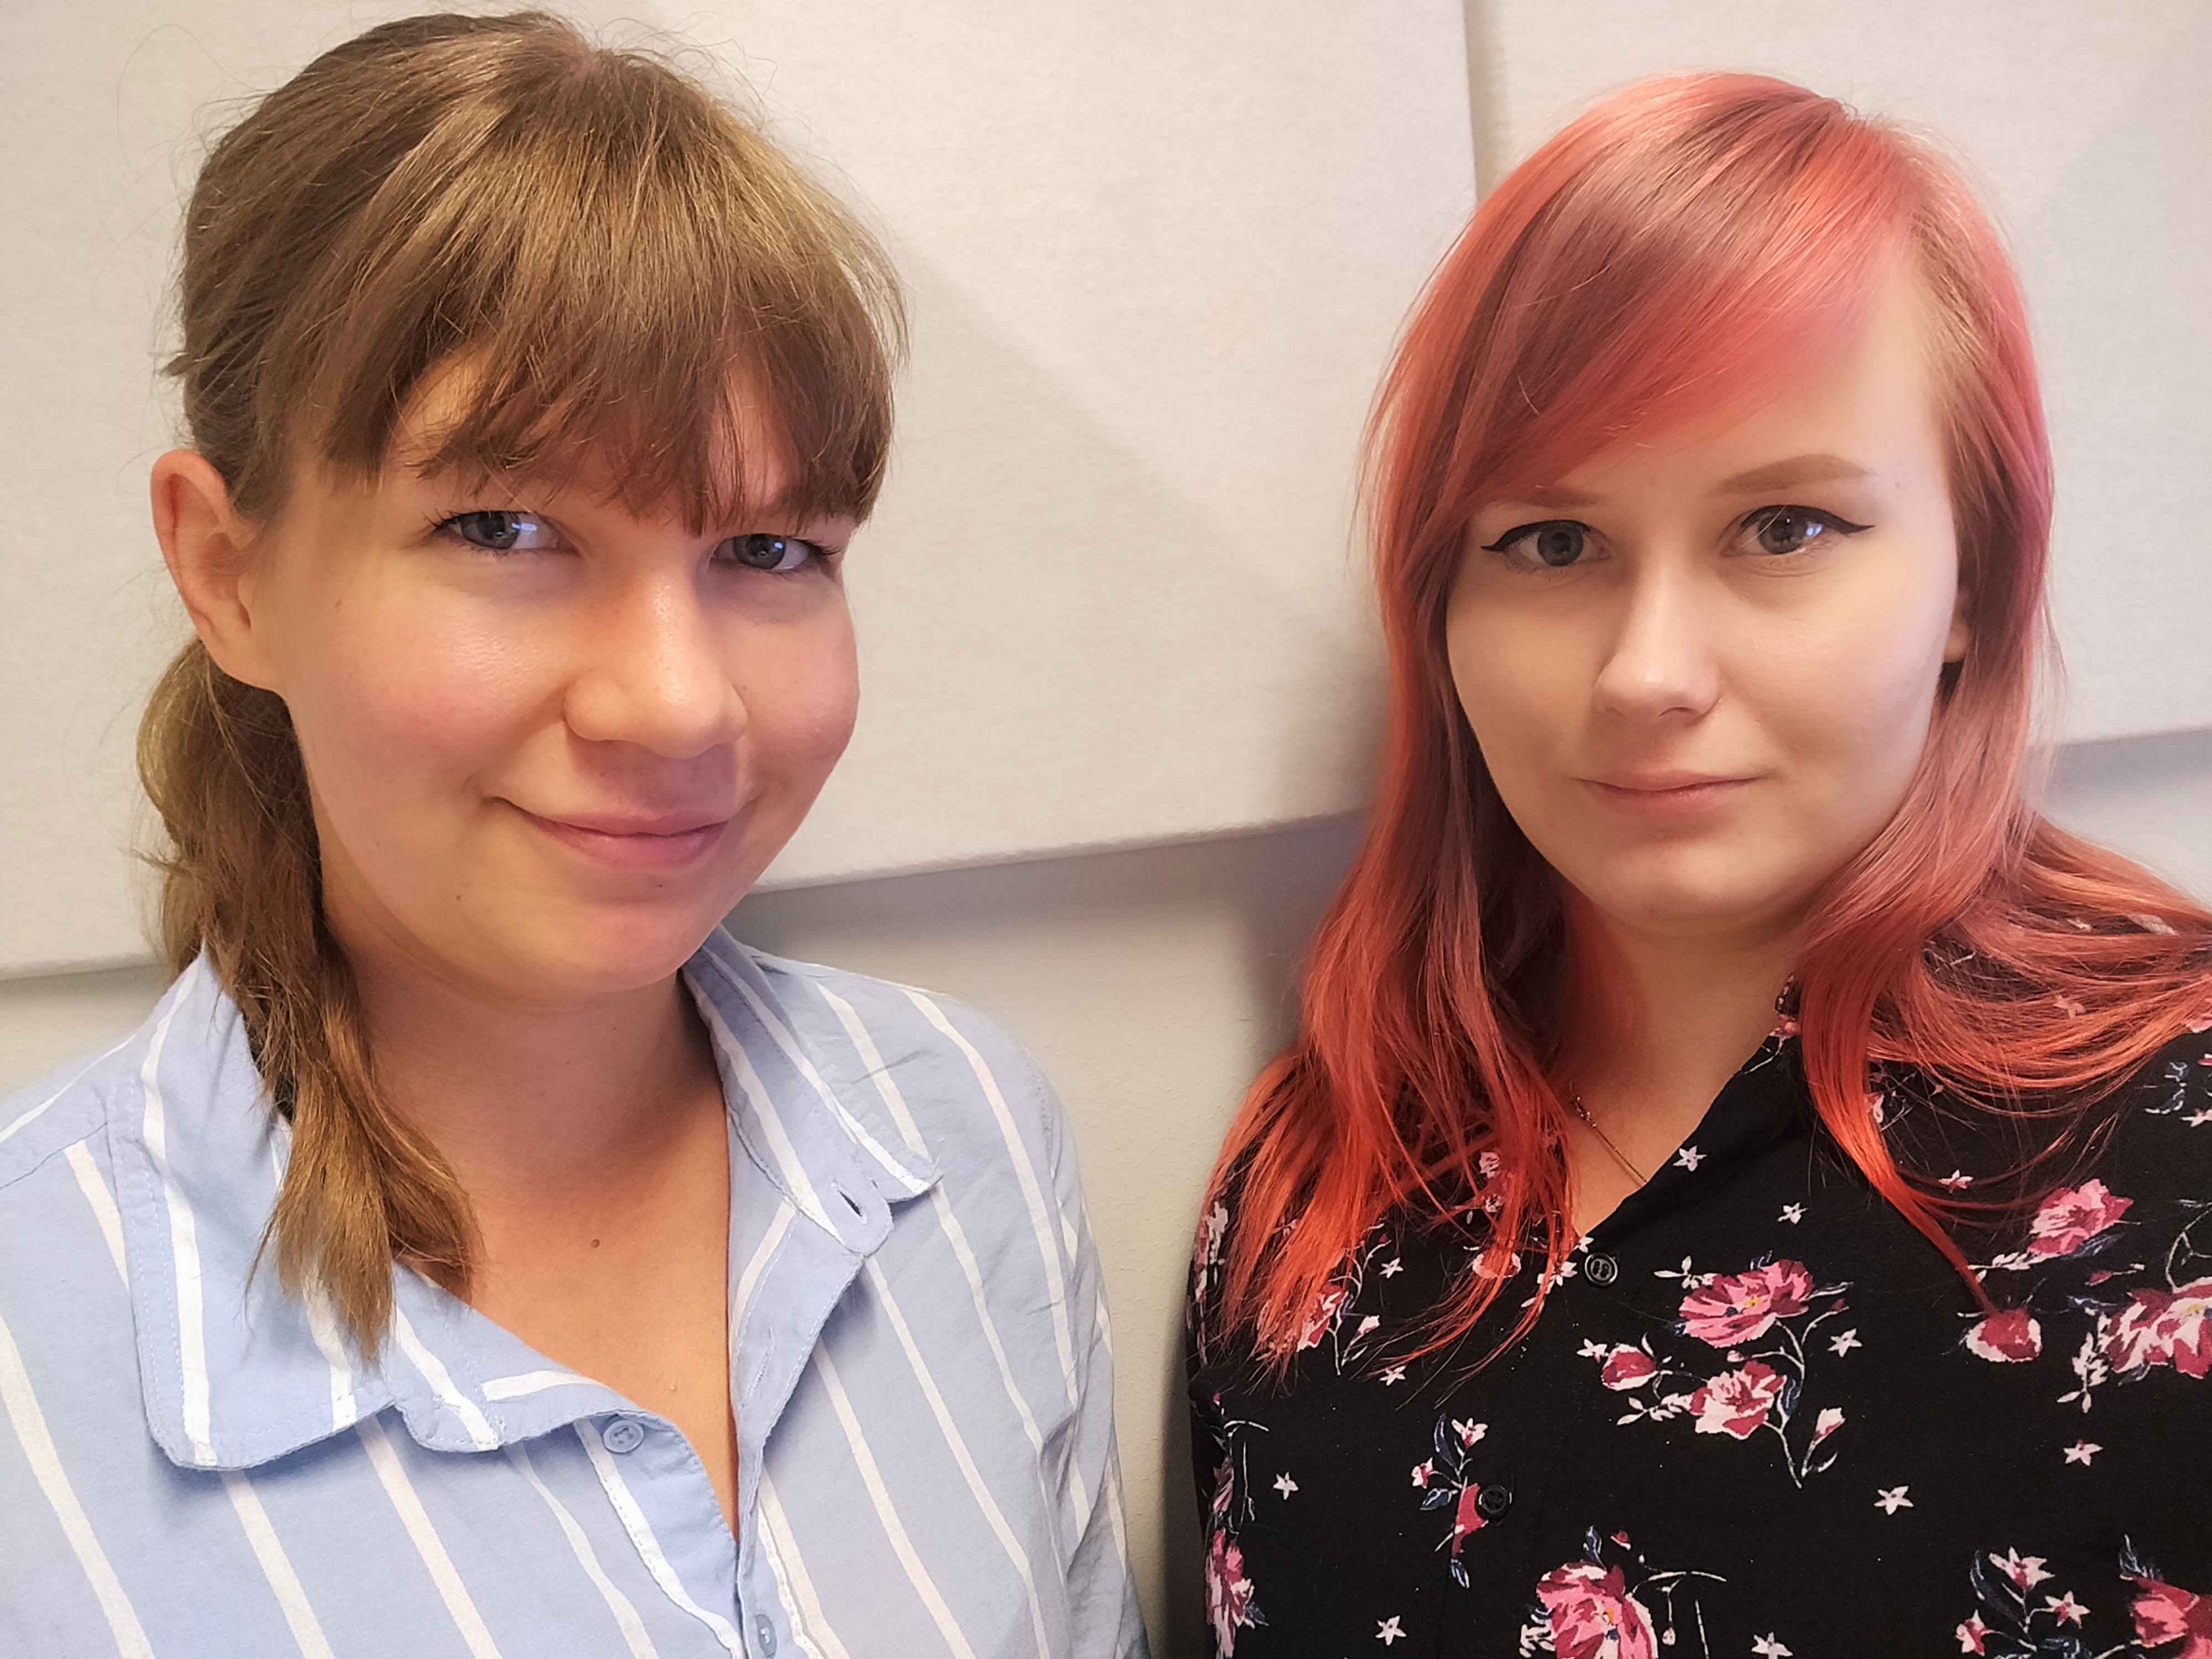 Meeri Hakala and Jonna Jantunen started their internship at the opendata.fi content creation team in May.